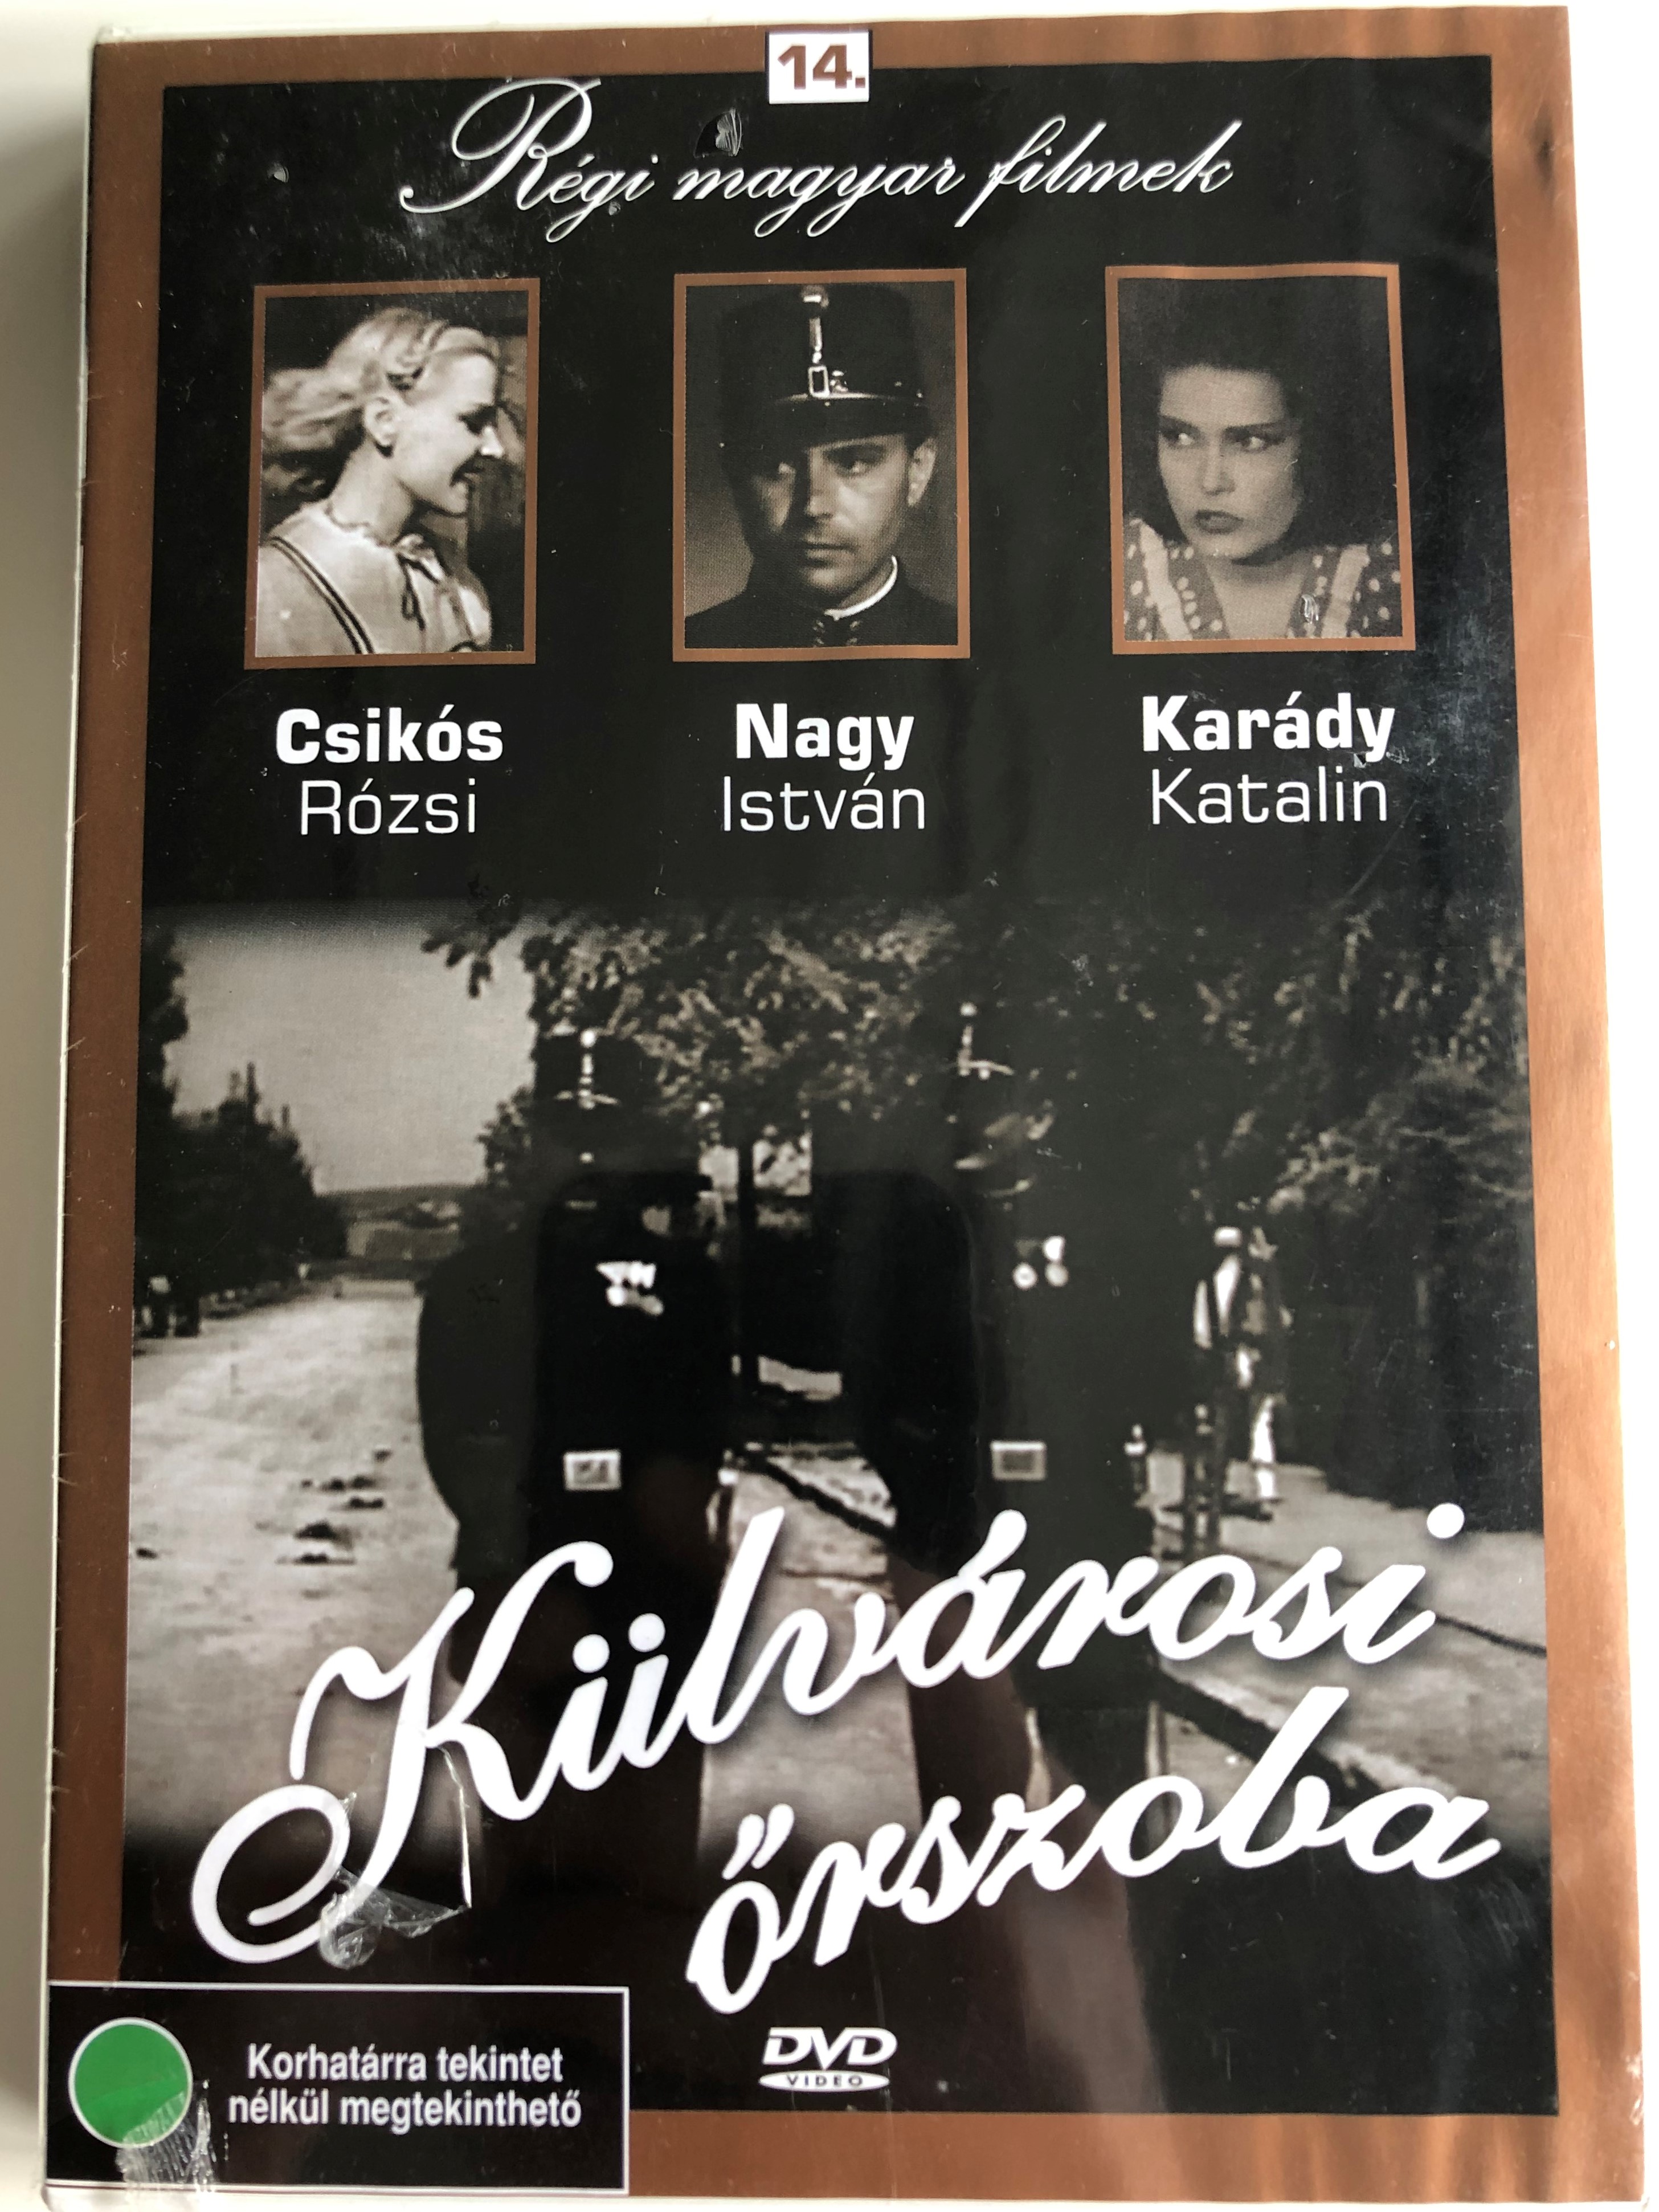 k-lv-rosi-rszoba-dvd-1942-directed-by-hamza-d.-kos-starring-csik-s-r-zsi-nagy-istv-n-kar-dy-katalin-r-gi-magyar-filmek-14.-hungarian-b-w-film-1-.jpg